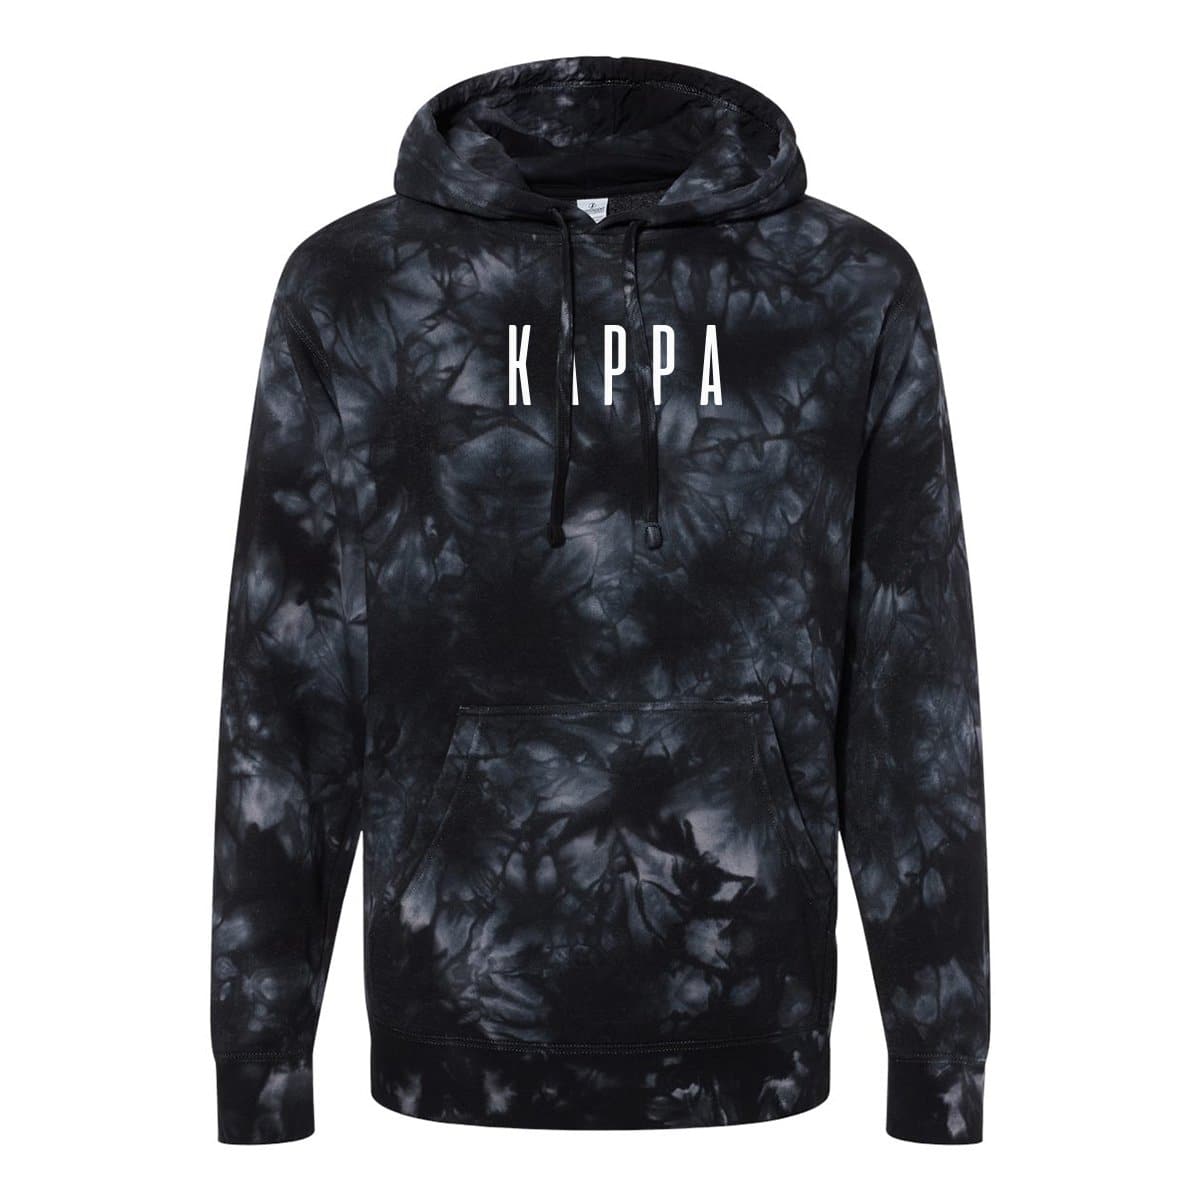 Kappa Black Tie Dye Hoodie | Kappa Kappa Gamma | Sweatshirts > Hooded sweatshirts